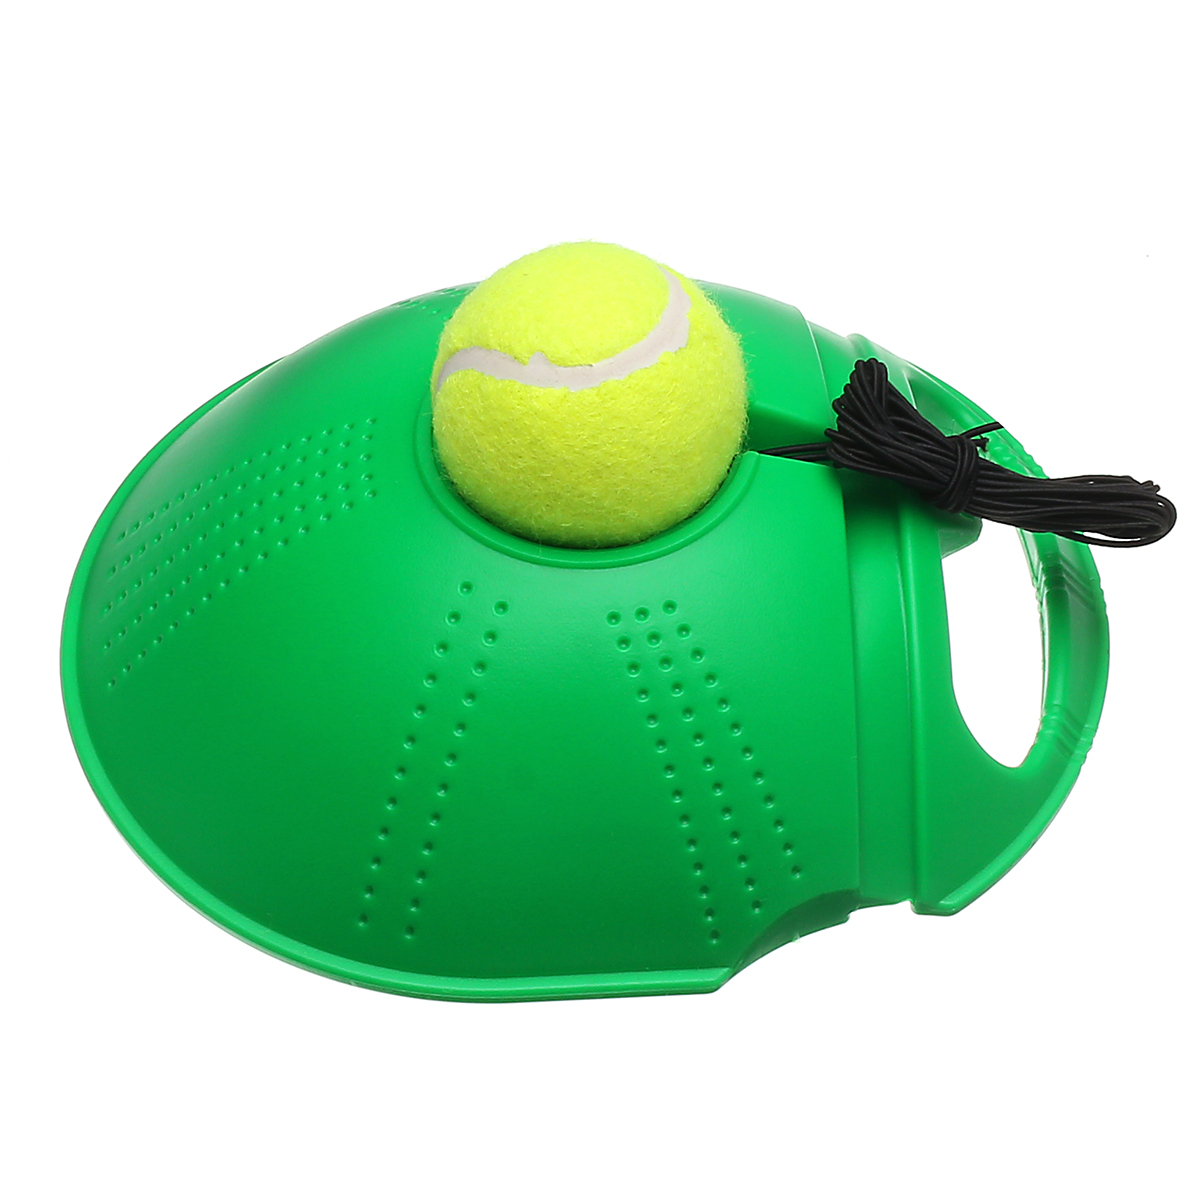 Tennis-Training-Tool-Rebound-Trainer-Self-study-Exercise-Ball-Baseboard-Holder-1305524-3